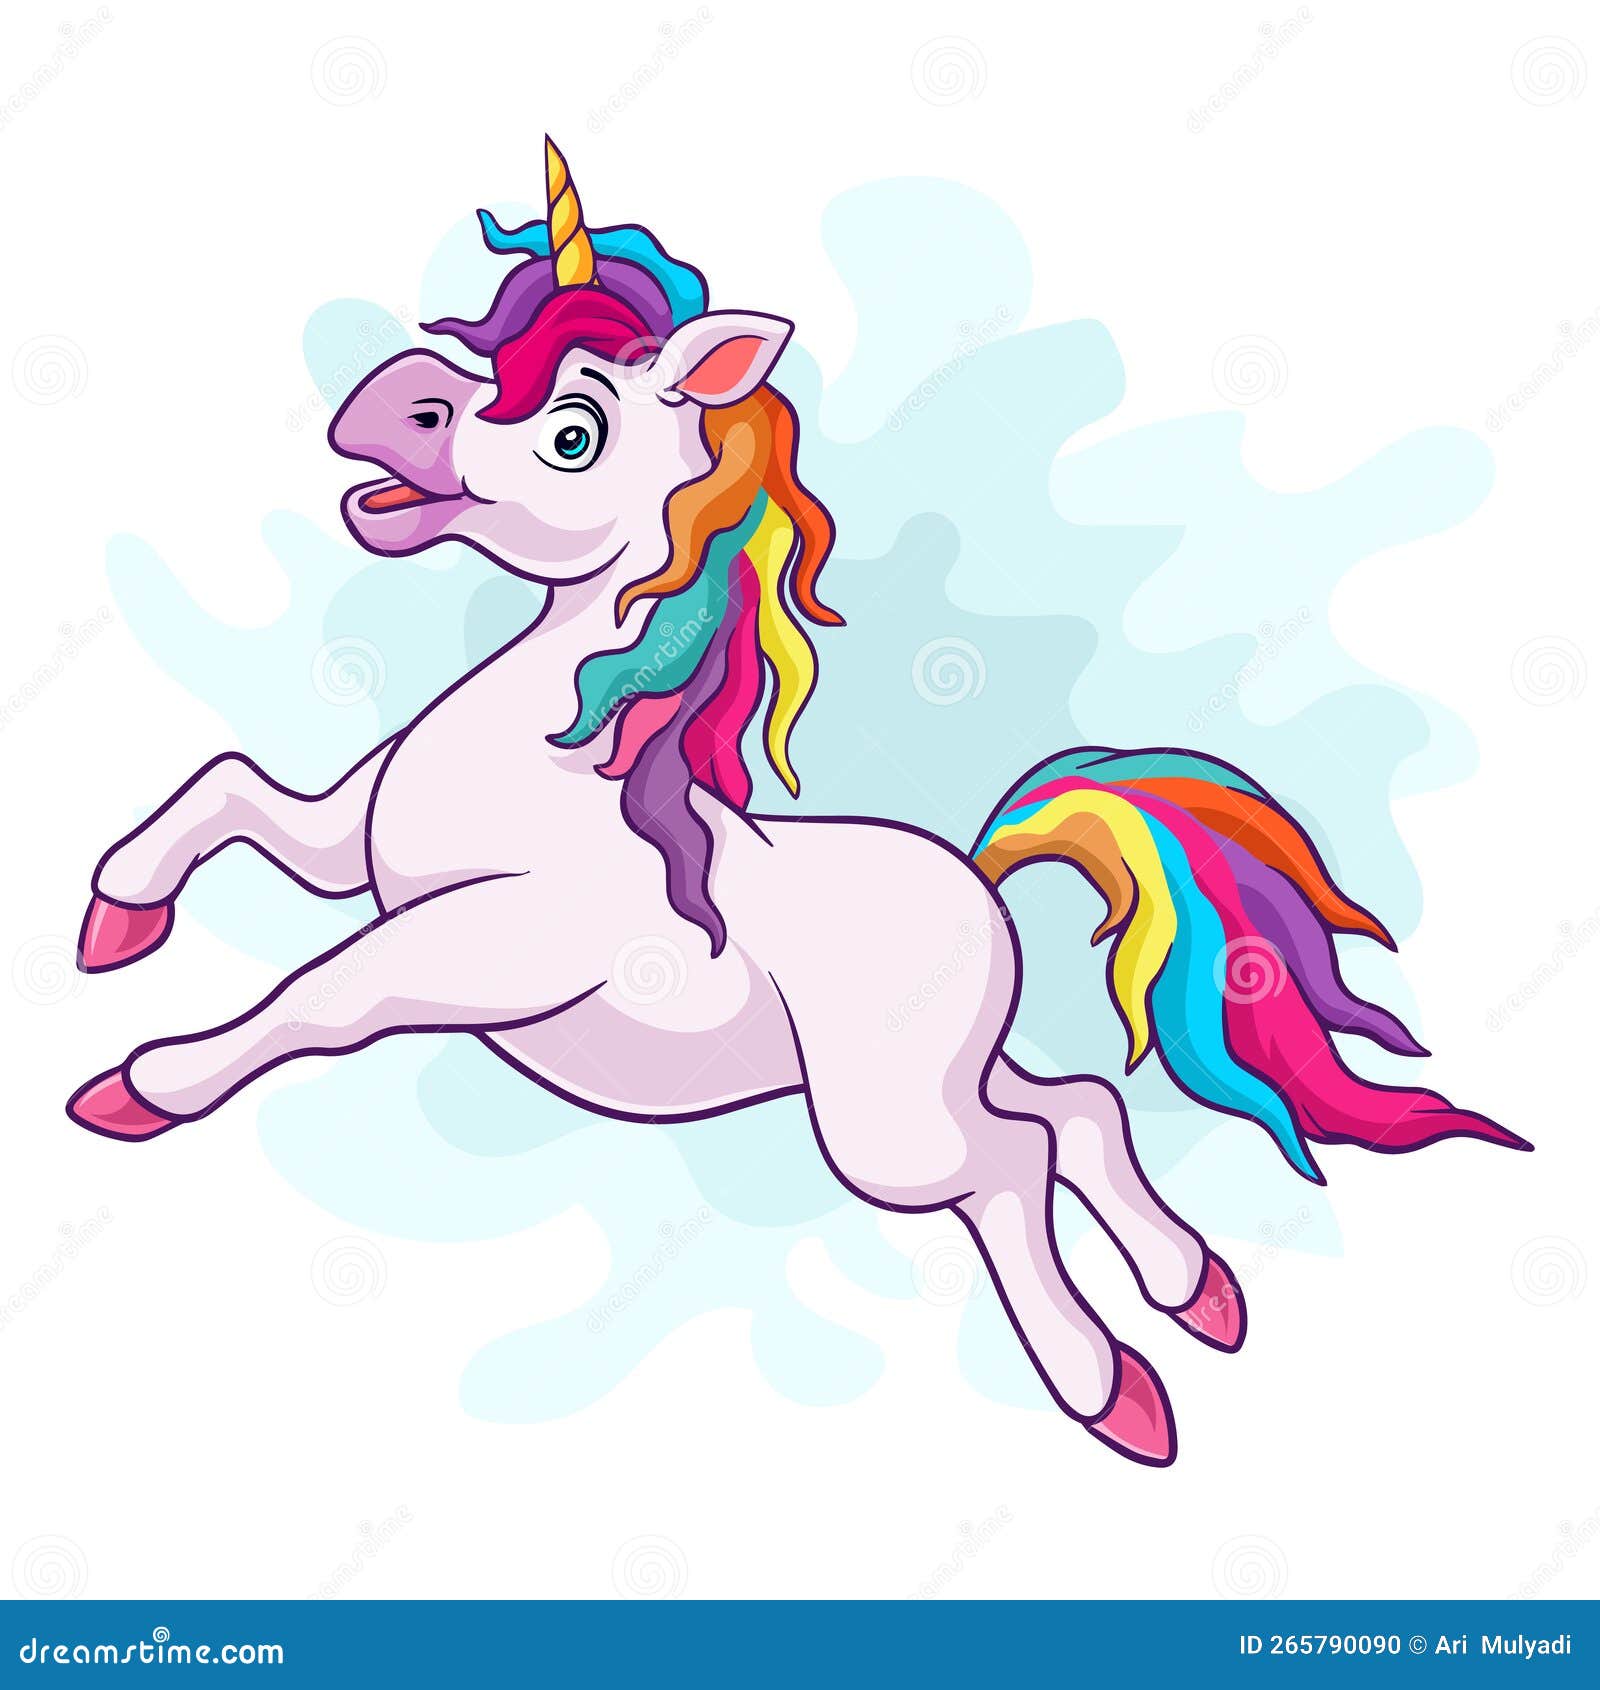 Cartoon Unicorn on White Background Stock Vector - Illustration of ...